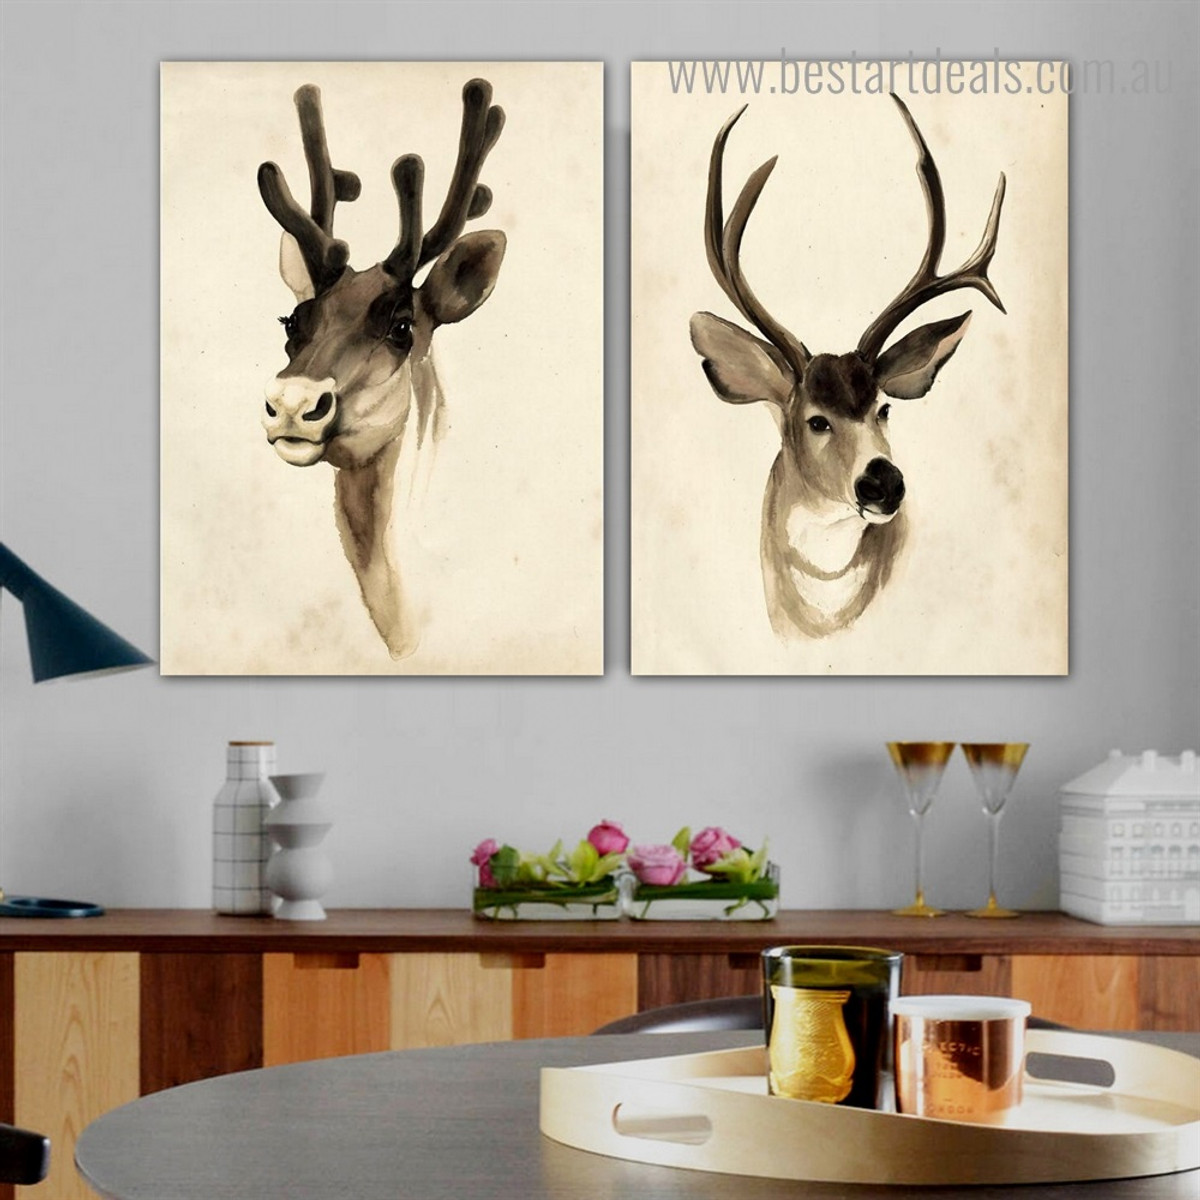 Horned Animal Modern Framed Artwork Pic Canvas Print for Room Wall Onlay